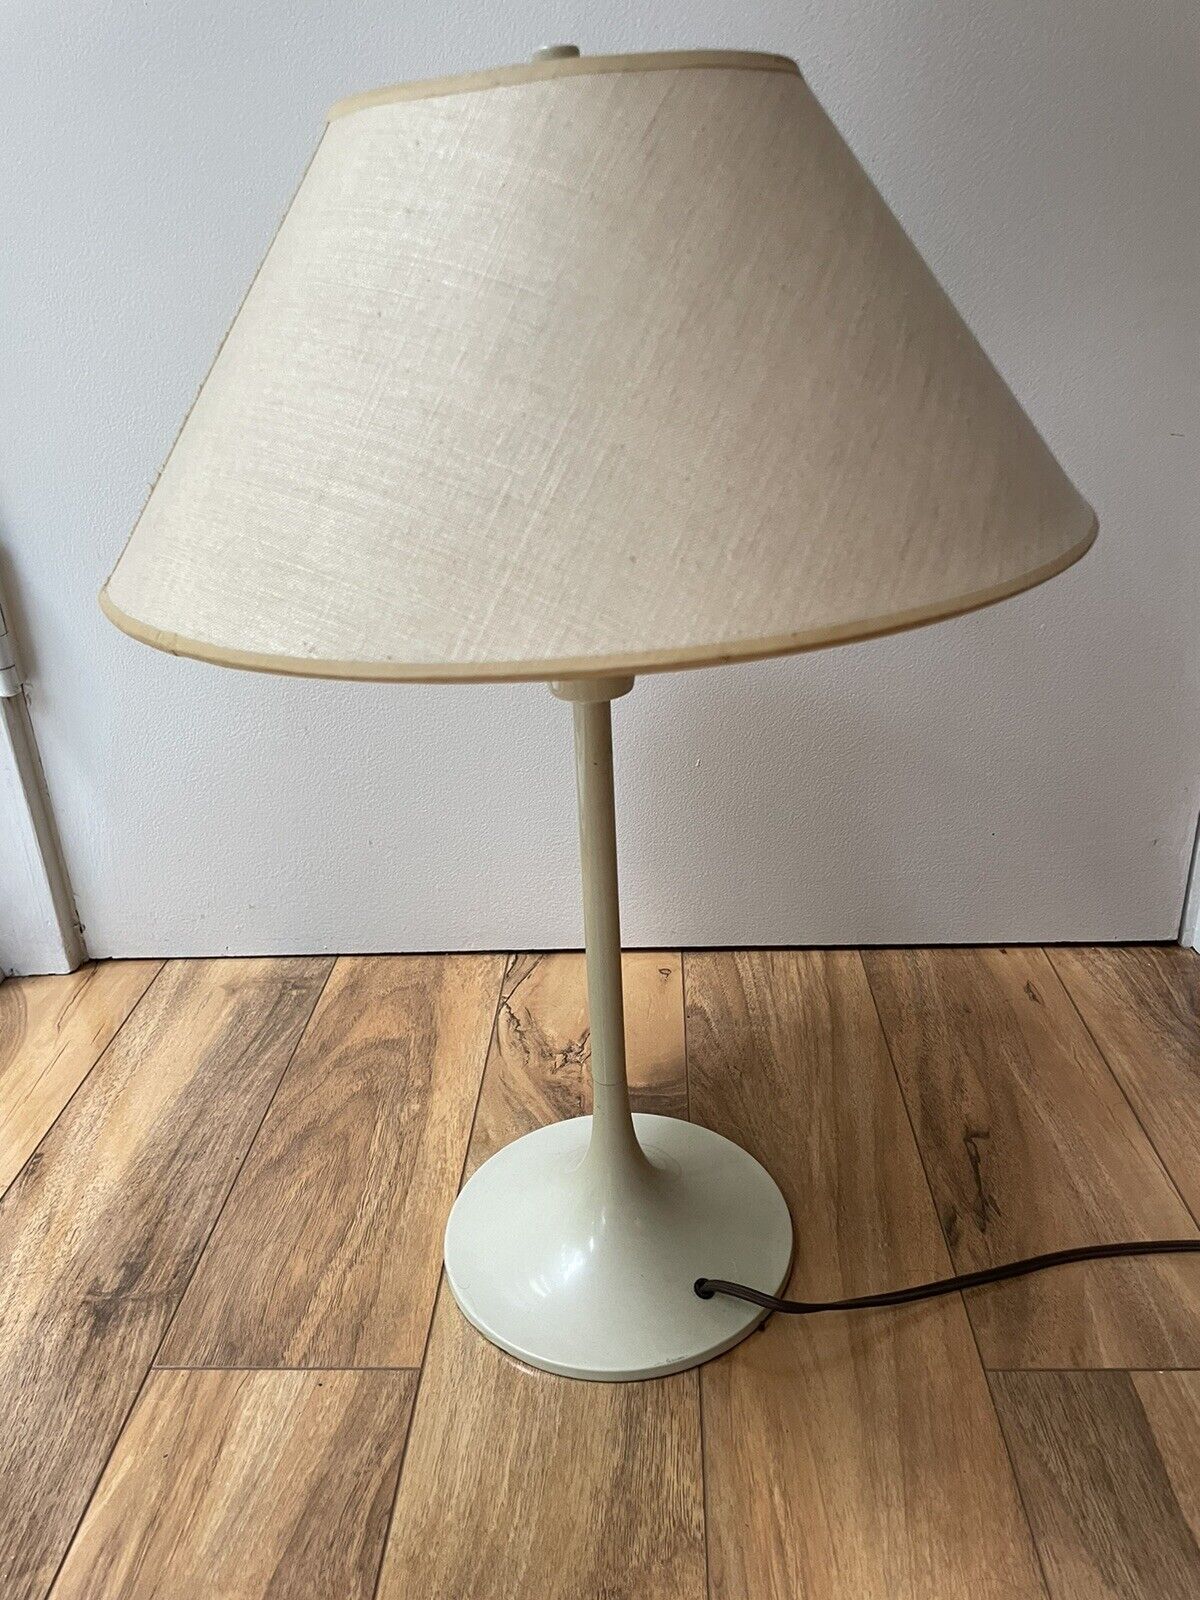 VINTAGE MID CENTURY MODERN EAMES MUSHROOM TABLE LAMP BASE BILL CURRY - LAUREL